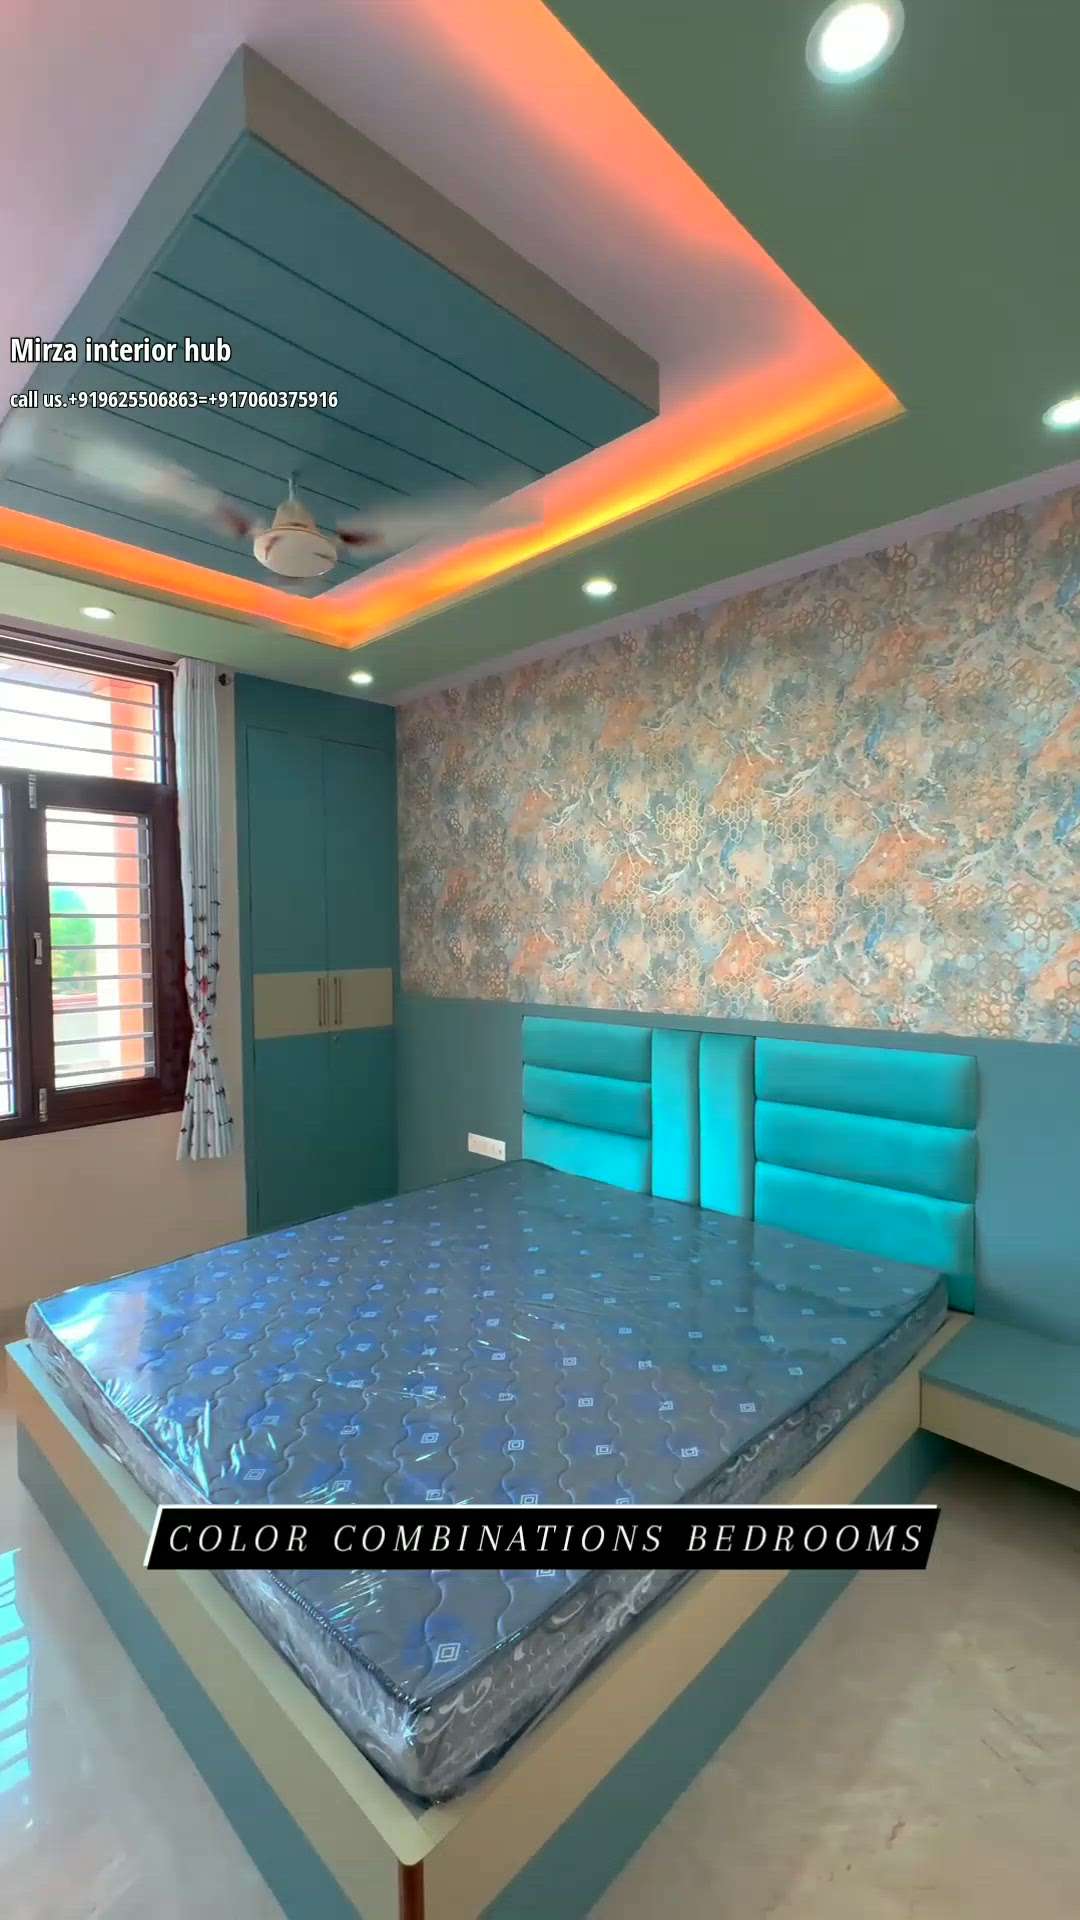 #BedroomDecor  #MasterBedroom  #BedroomDesigns  #ModularKitchen  #modularwardrobe  #Modularfurniture  #HomeDecor  #InteriorDesigner  #furniture  work karane ke liye contact kare 
whats.+919625506863
call.+917060375916 Saquib Mirza